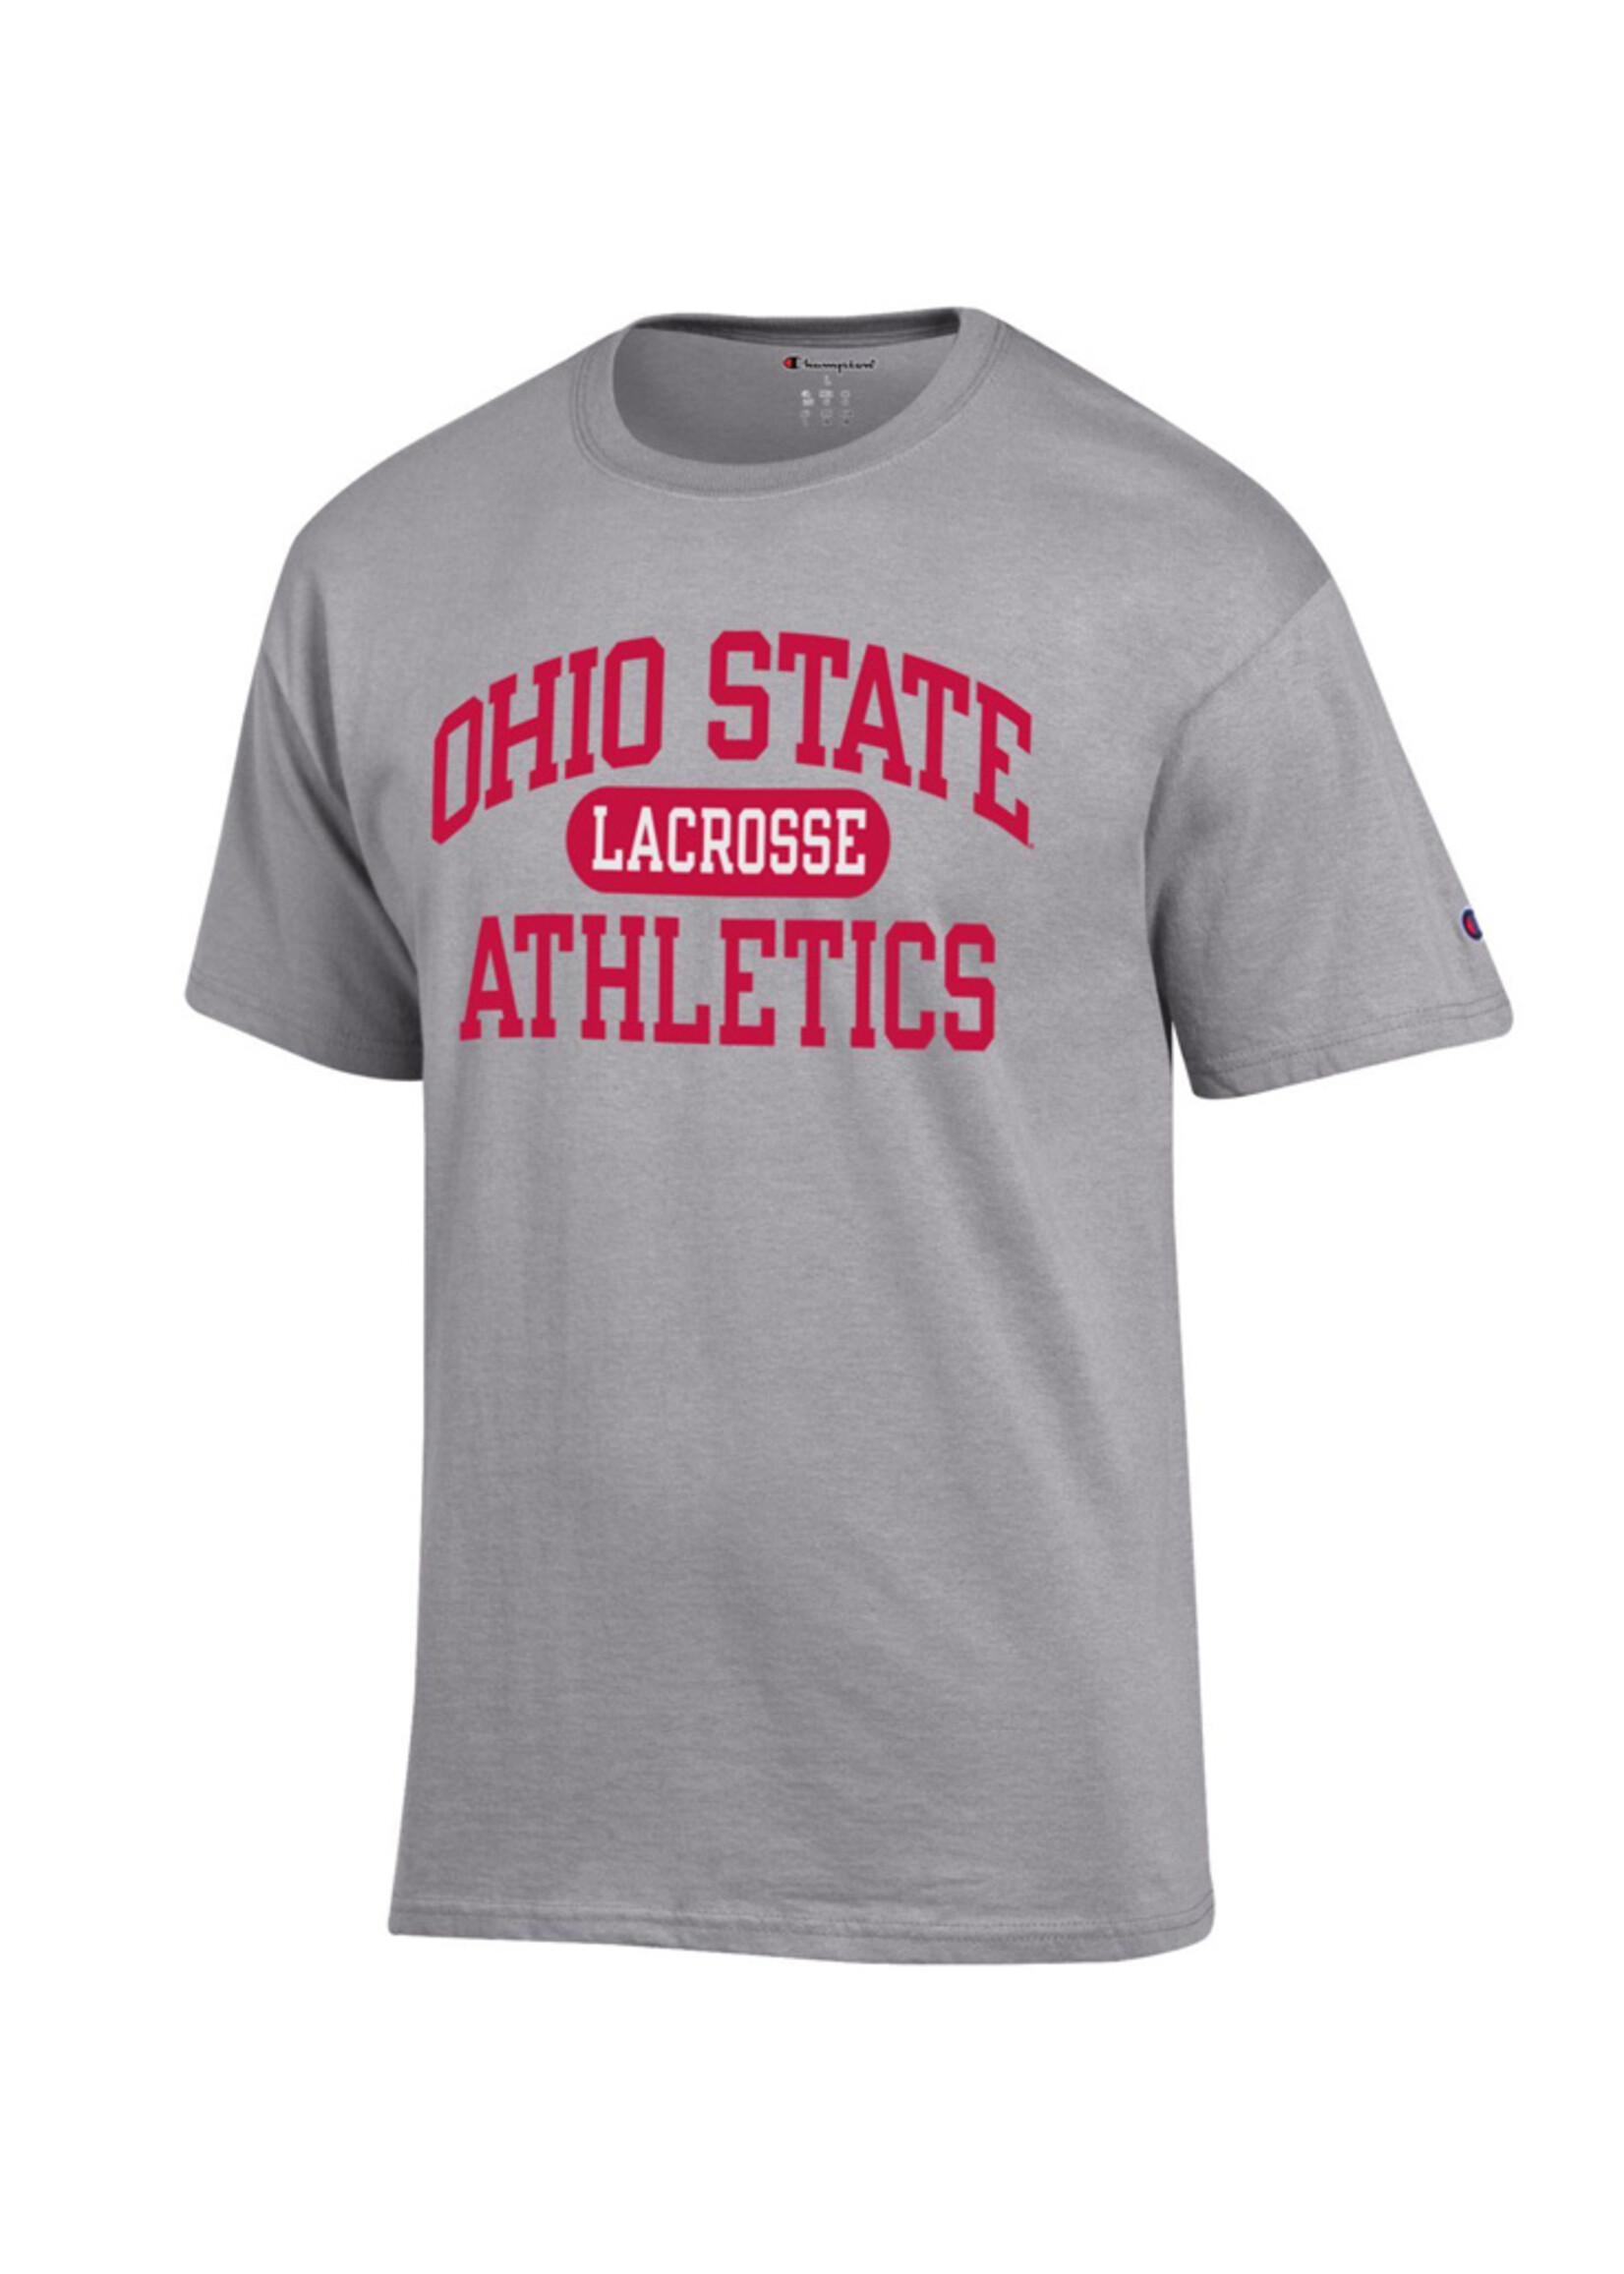 Champion Ohio State Buckeyes Lacrosse T-Shirt